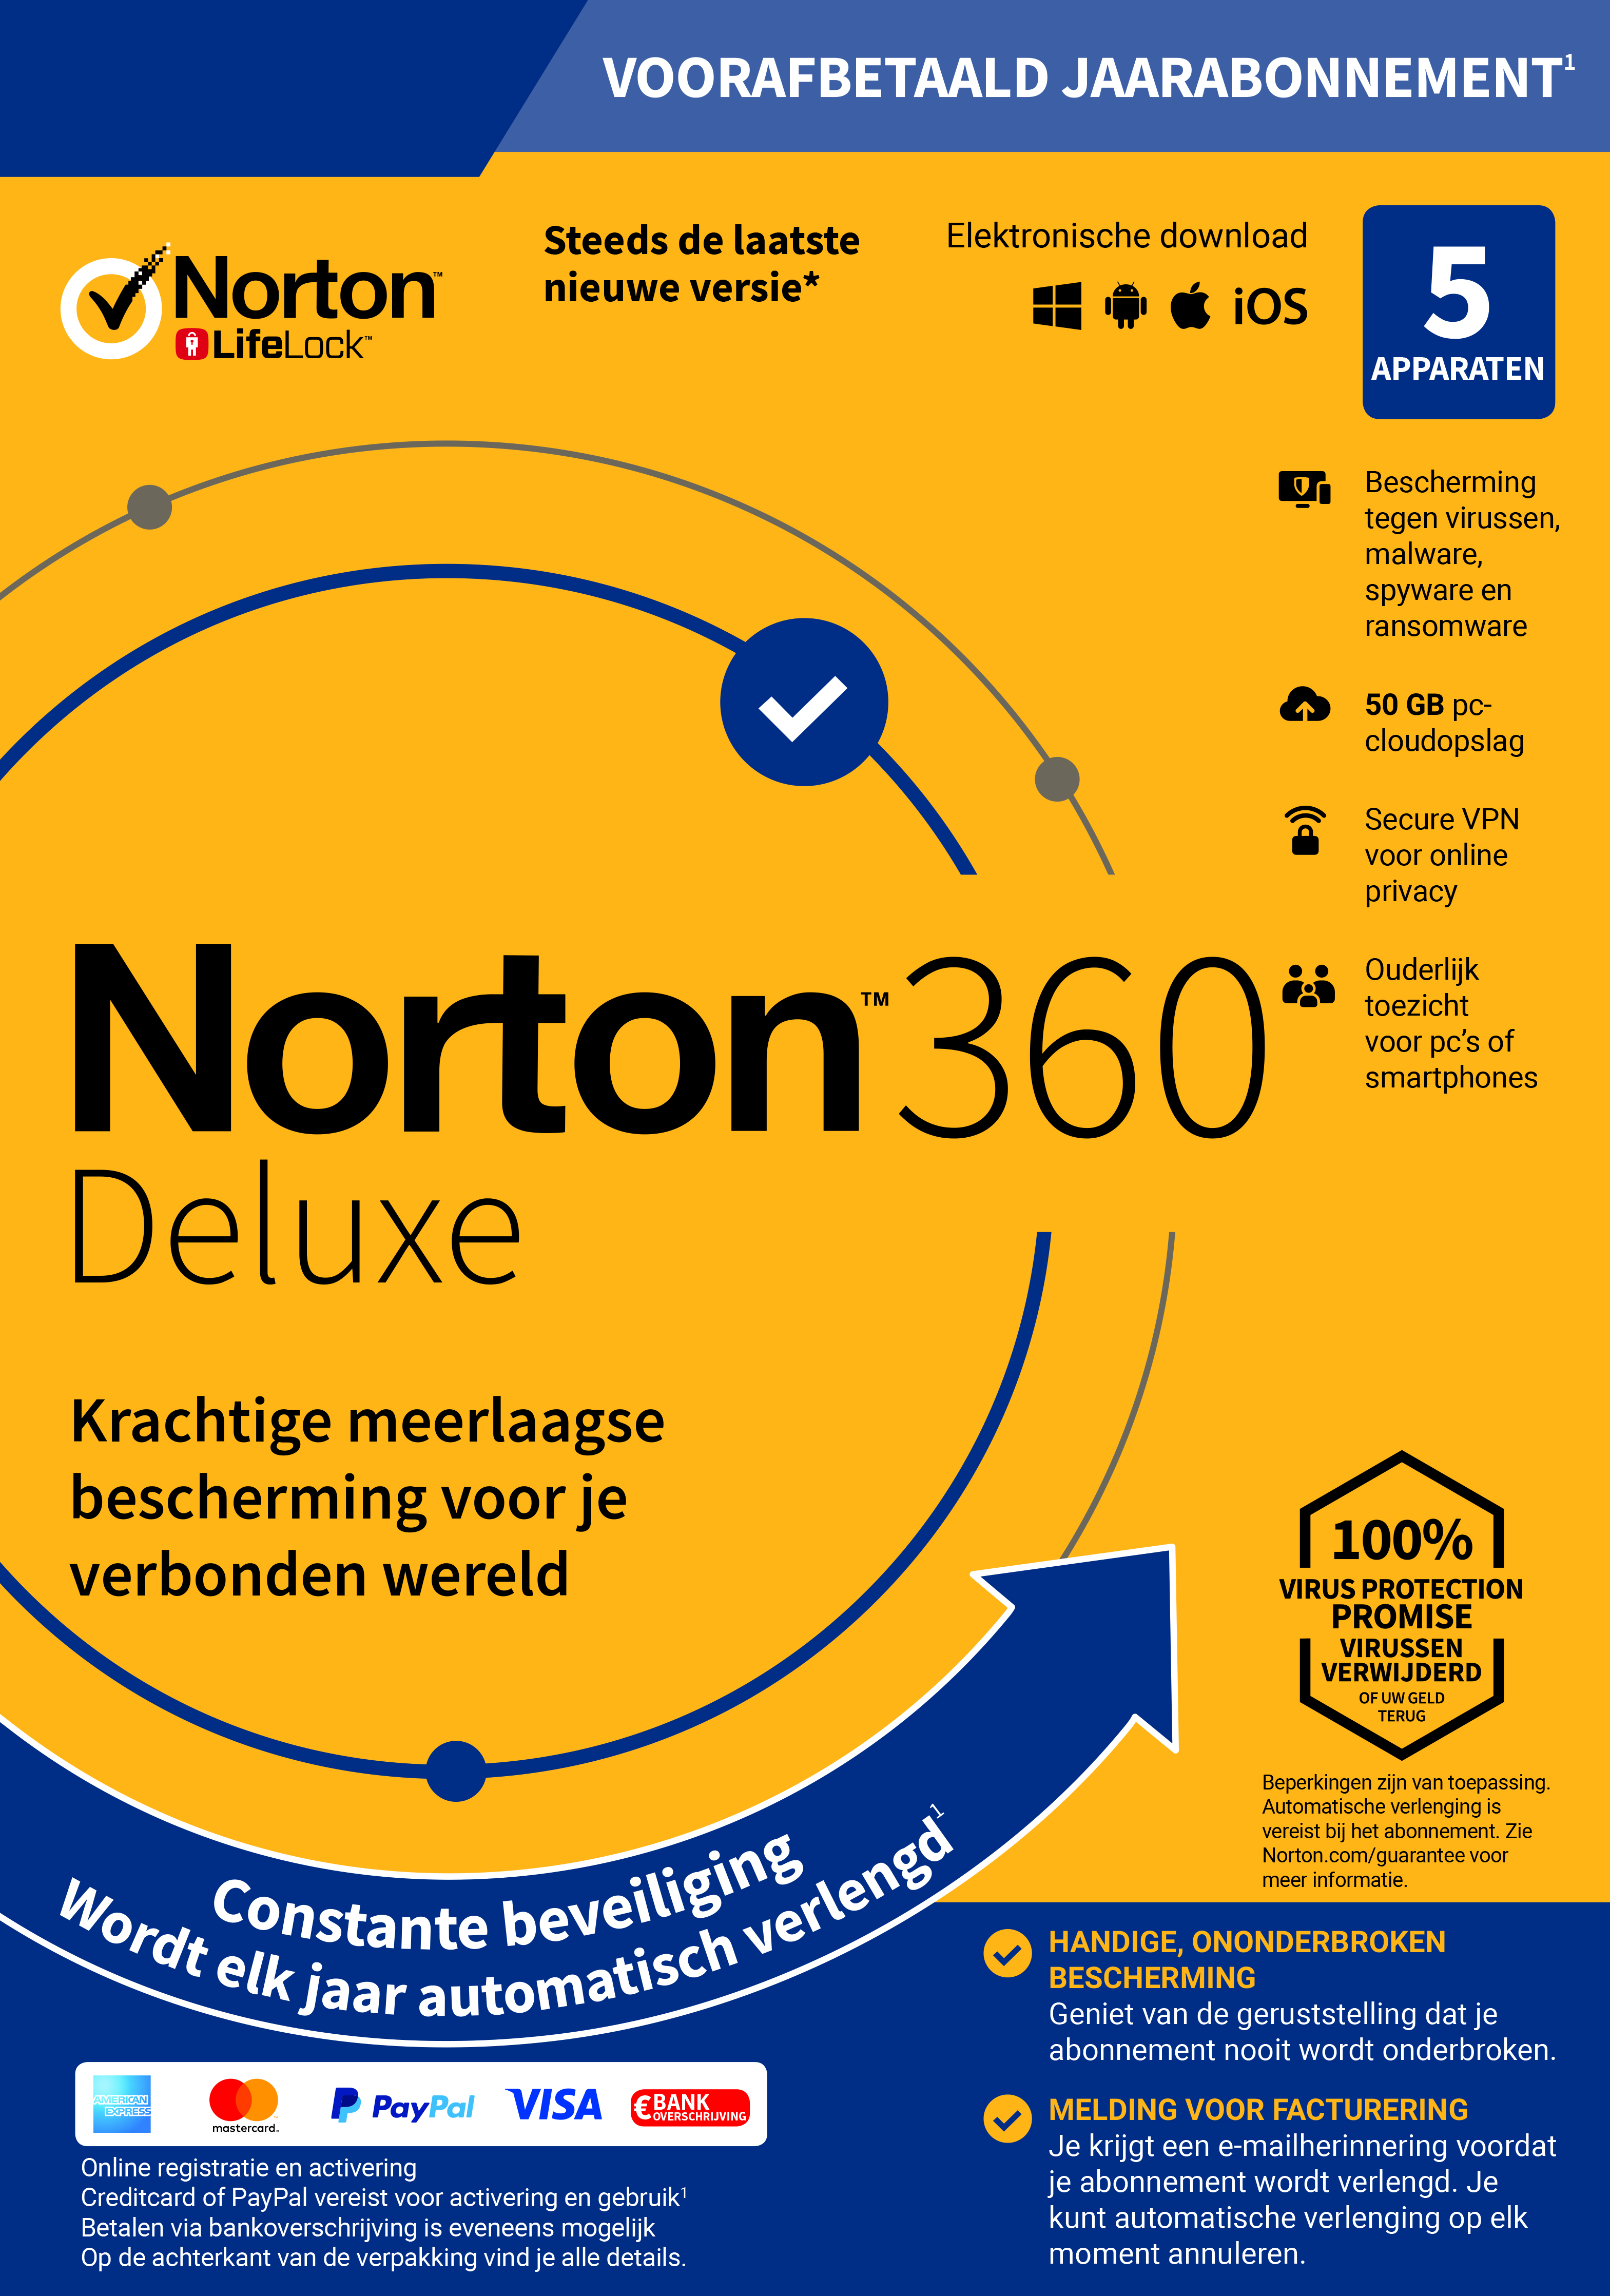  Norton 360 Deluxe 5 appareils